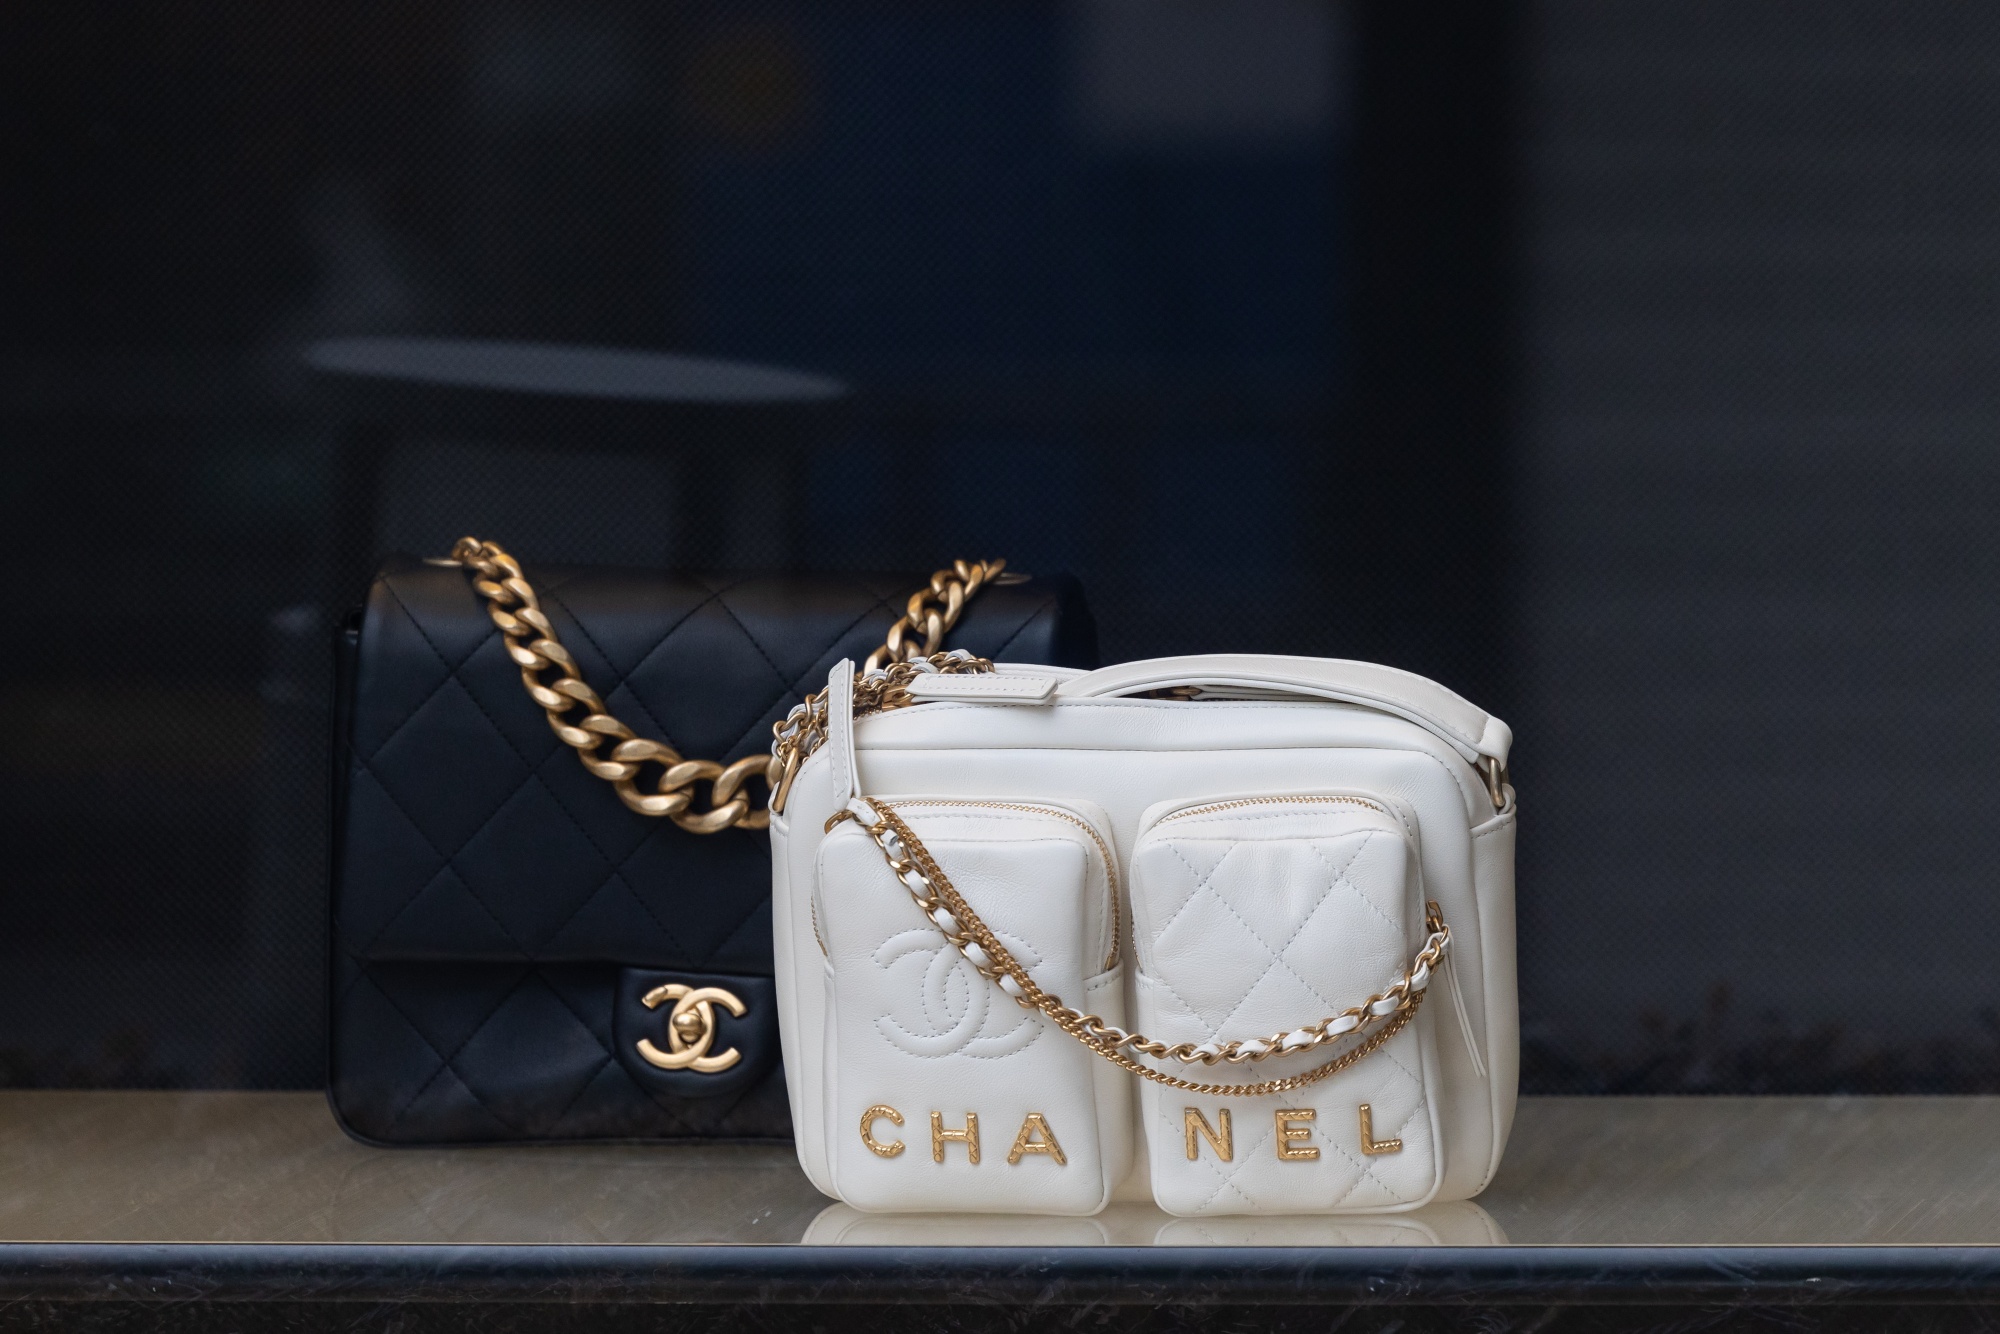 Chanel Handbags in Ethiopia for sale  Prices on Jijicomet